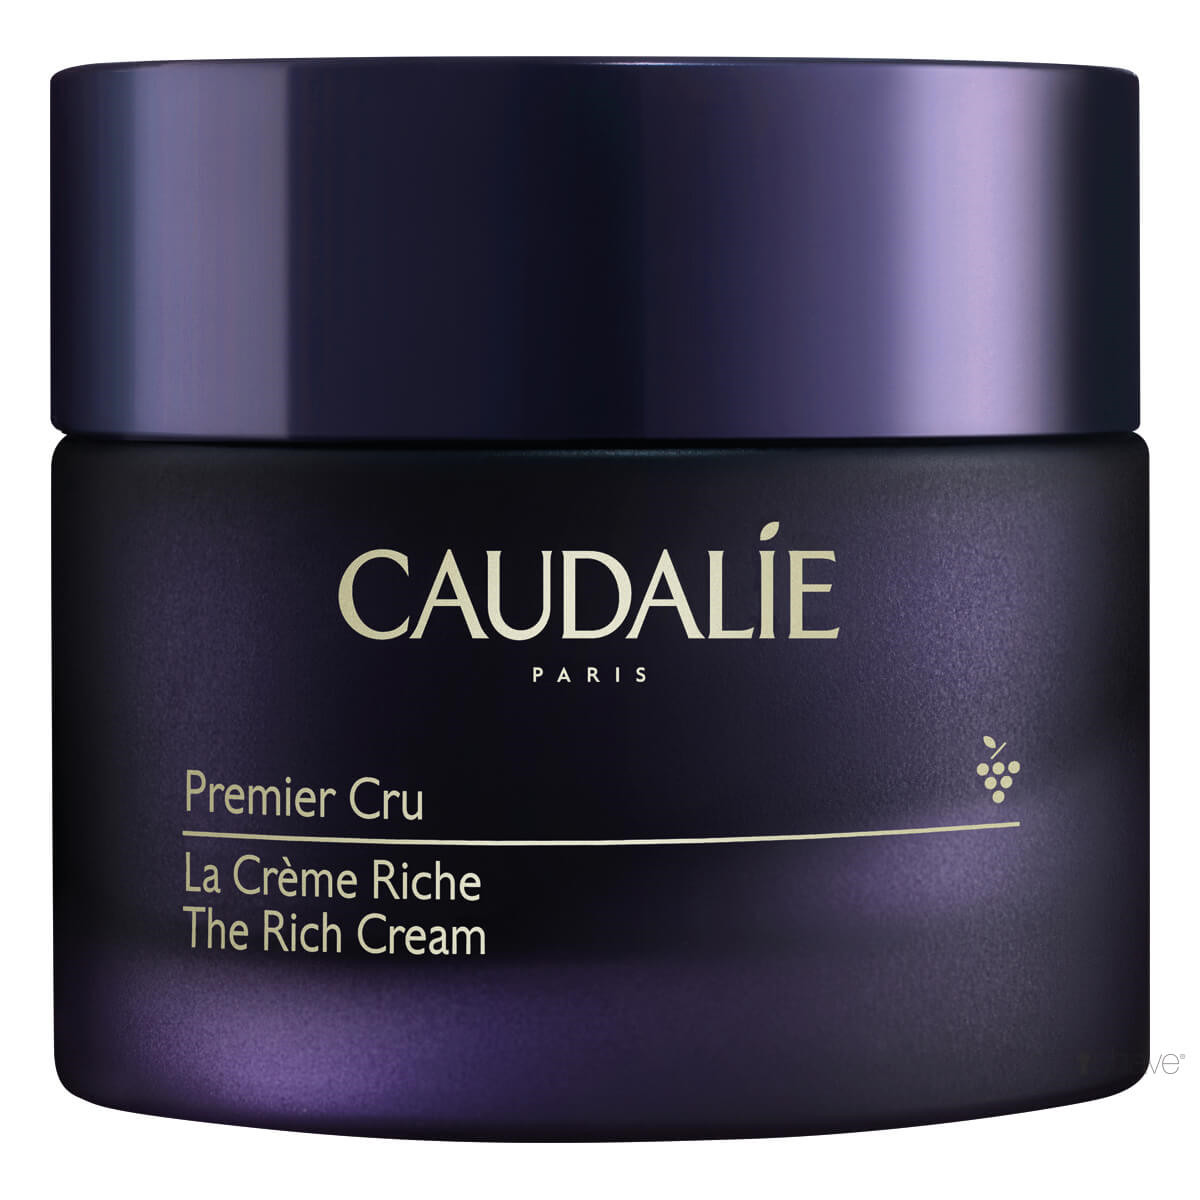 5: Caudalie Premier Cru, The Rich Cream, 50 ml.